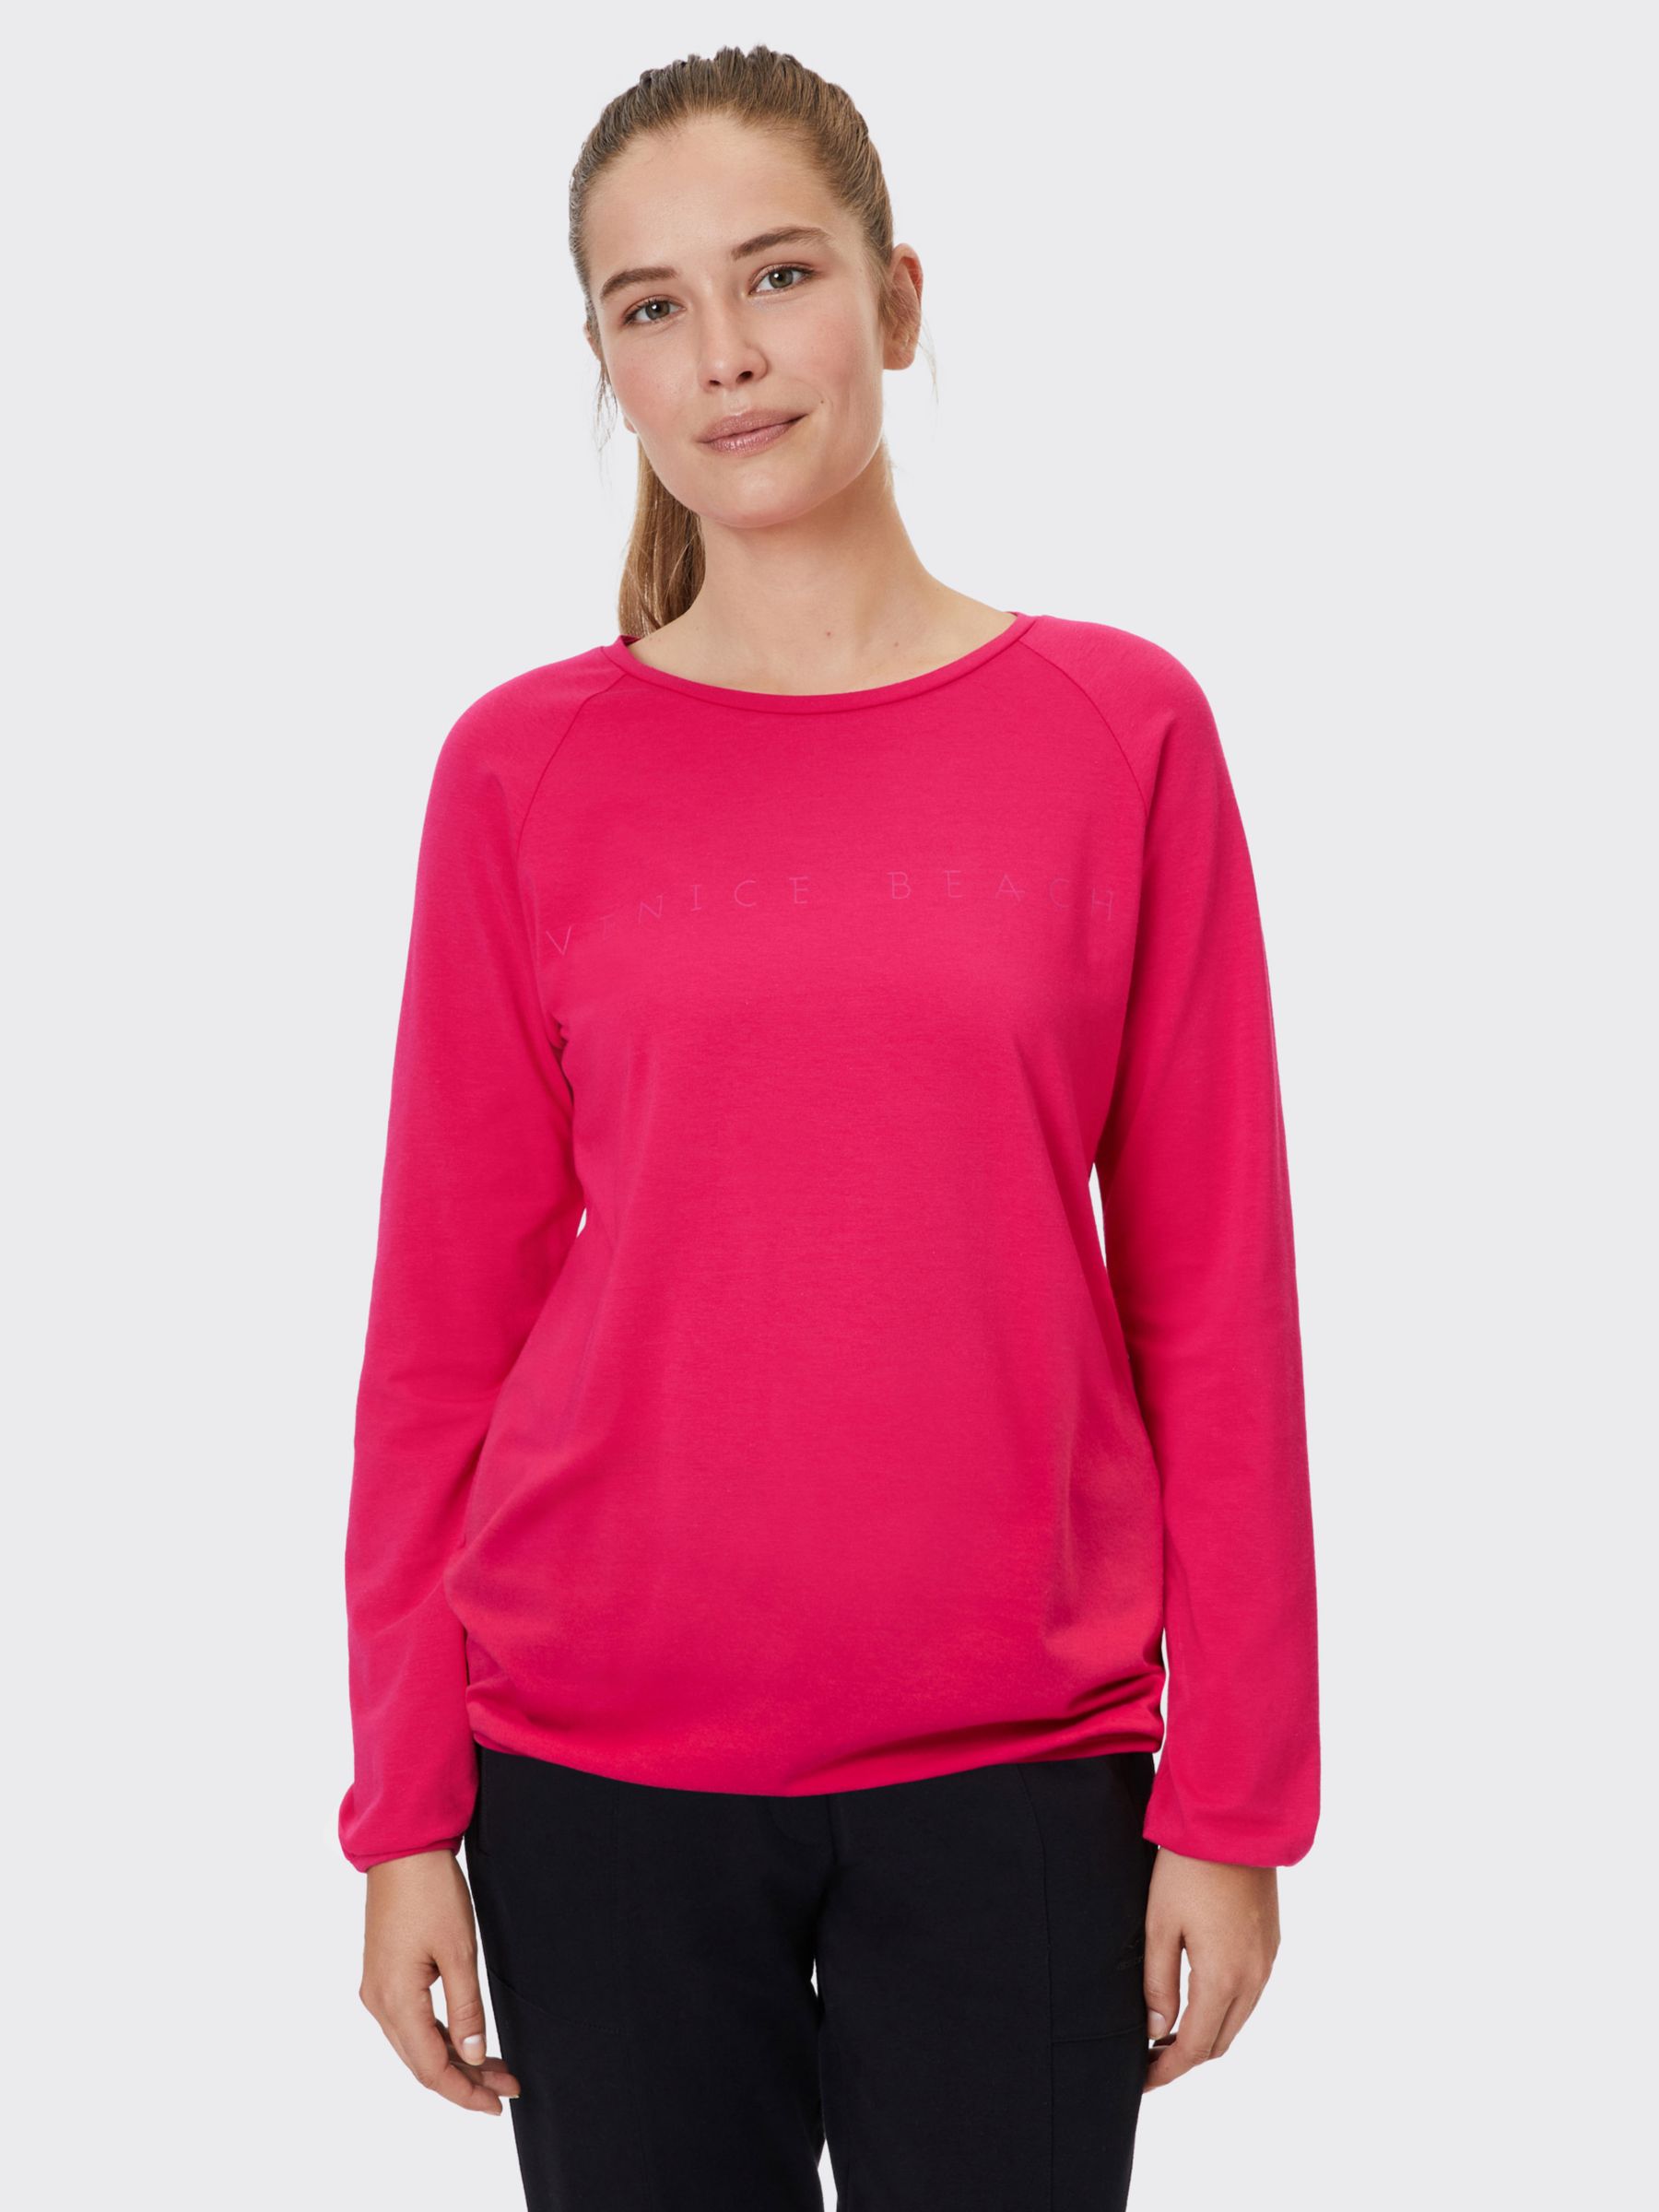 Venice Beach Rylee Sweatshirt, Ruby Red, XS